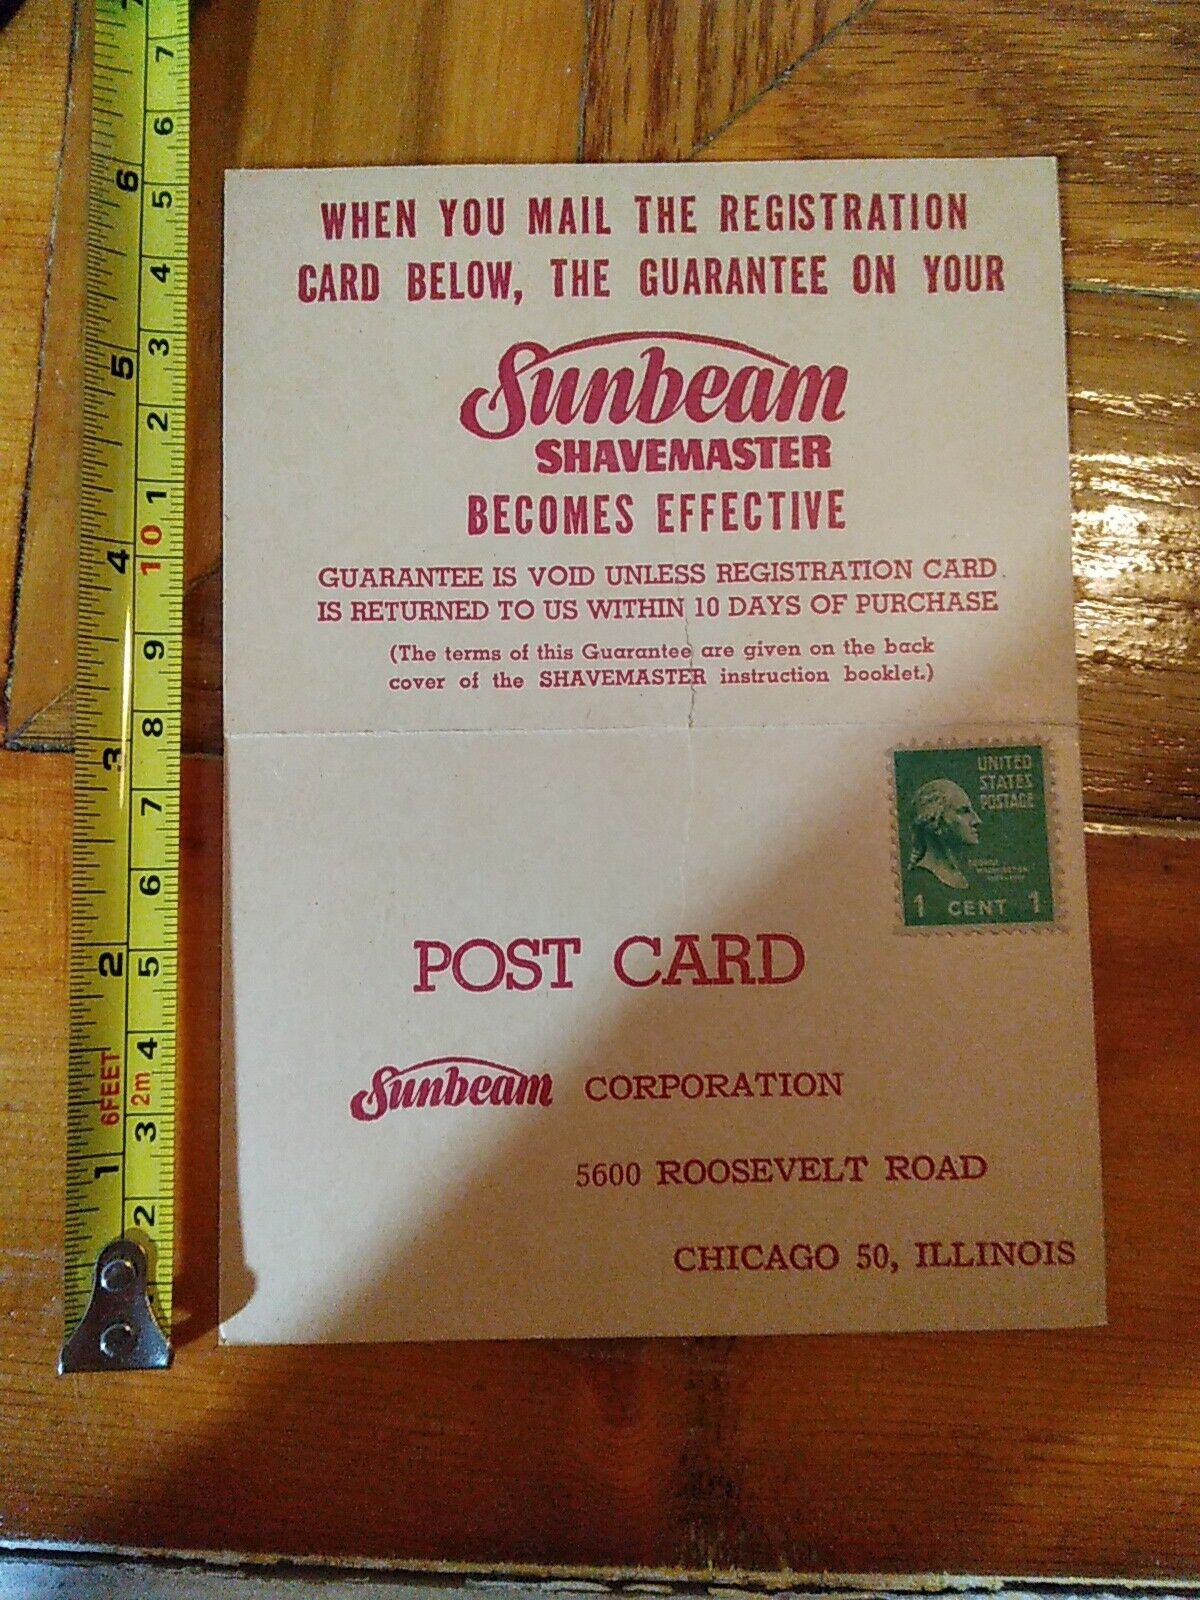 George Washington 1 Cent Stamp On Vintage Sunbeam Shavemaster Advertisement Card